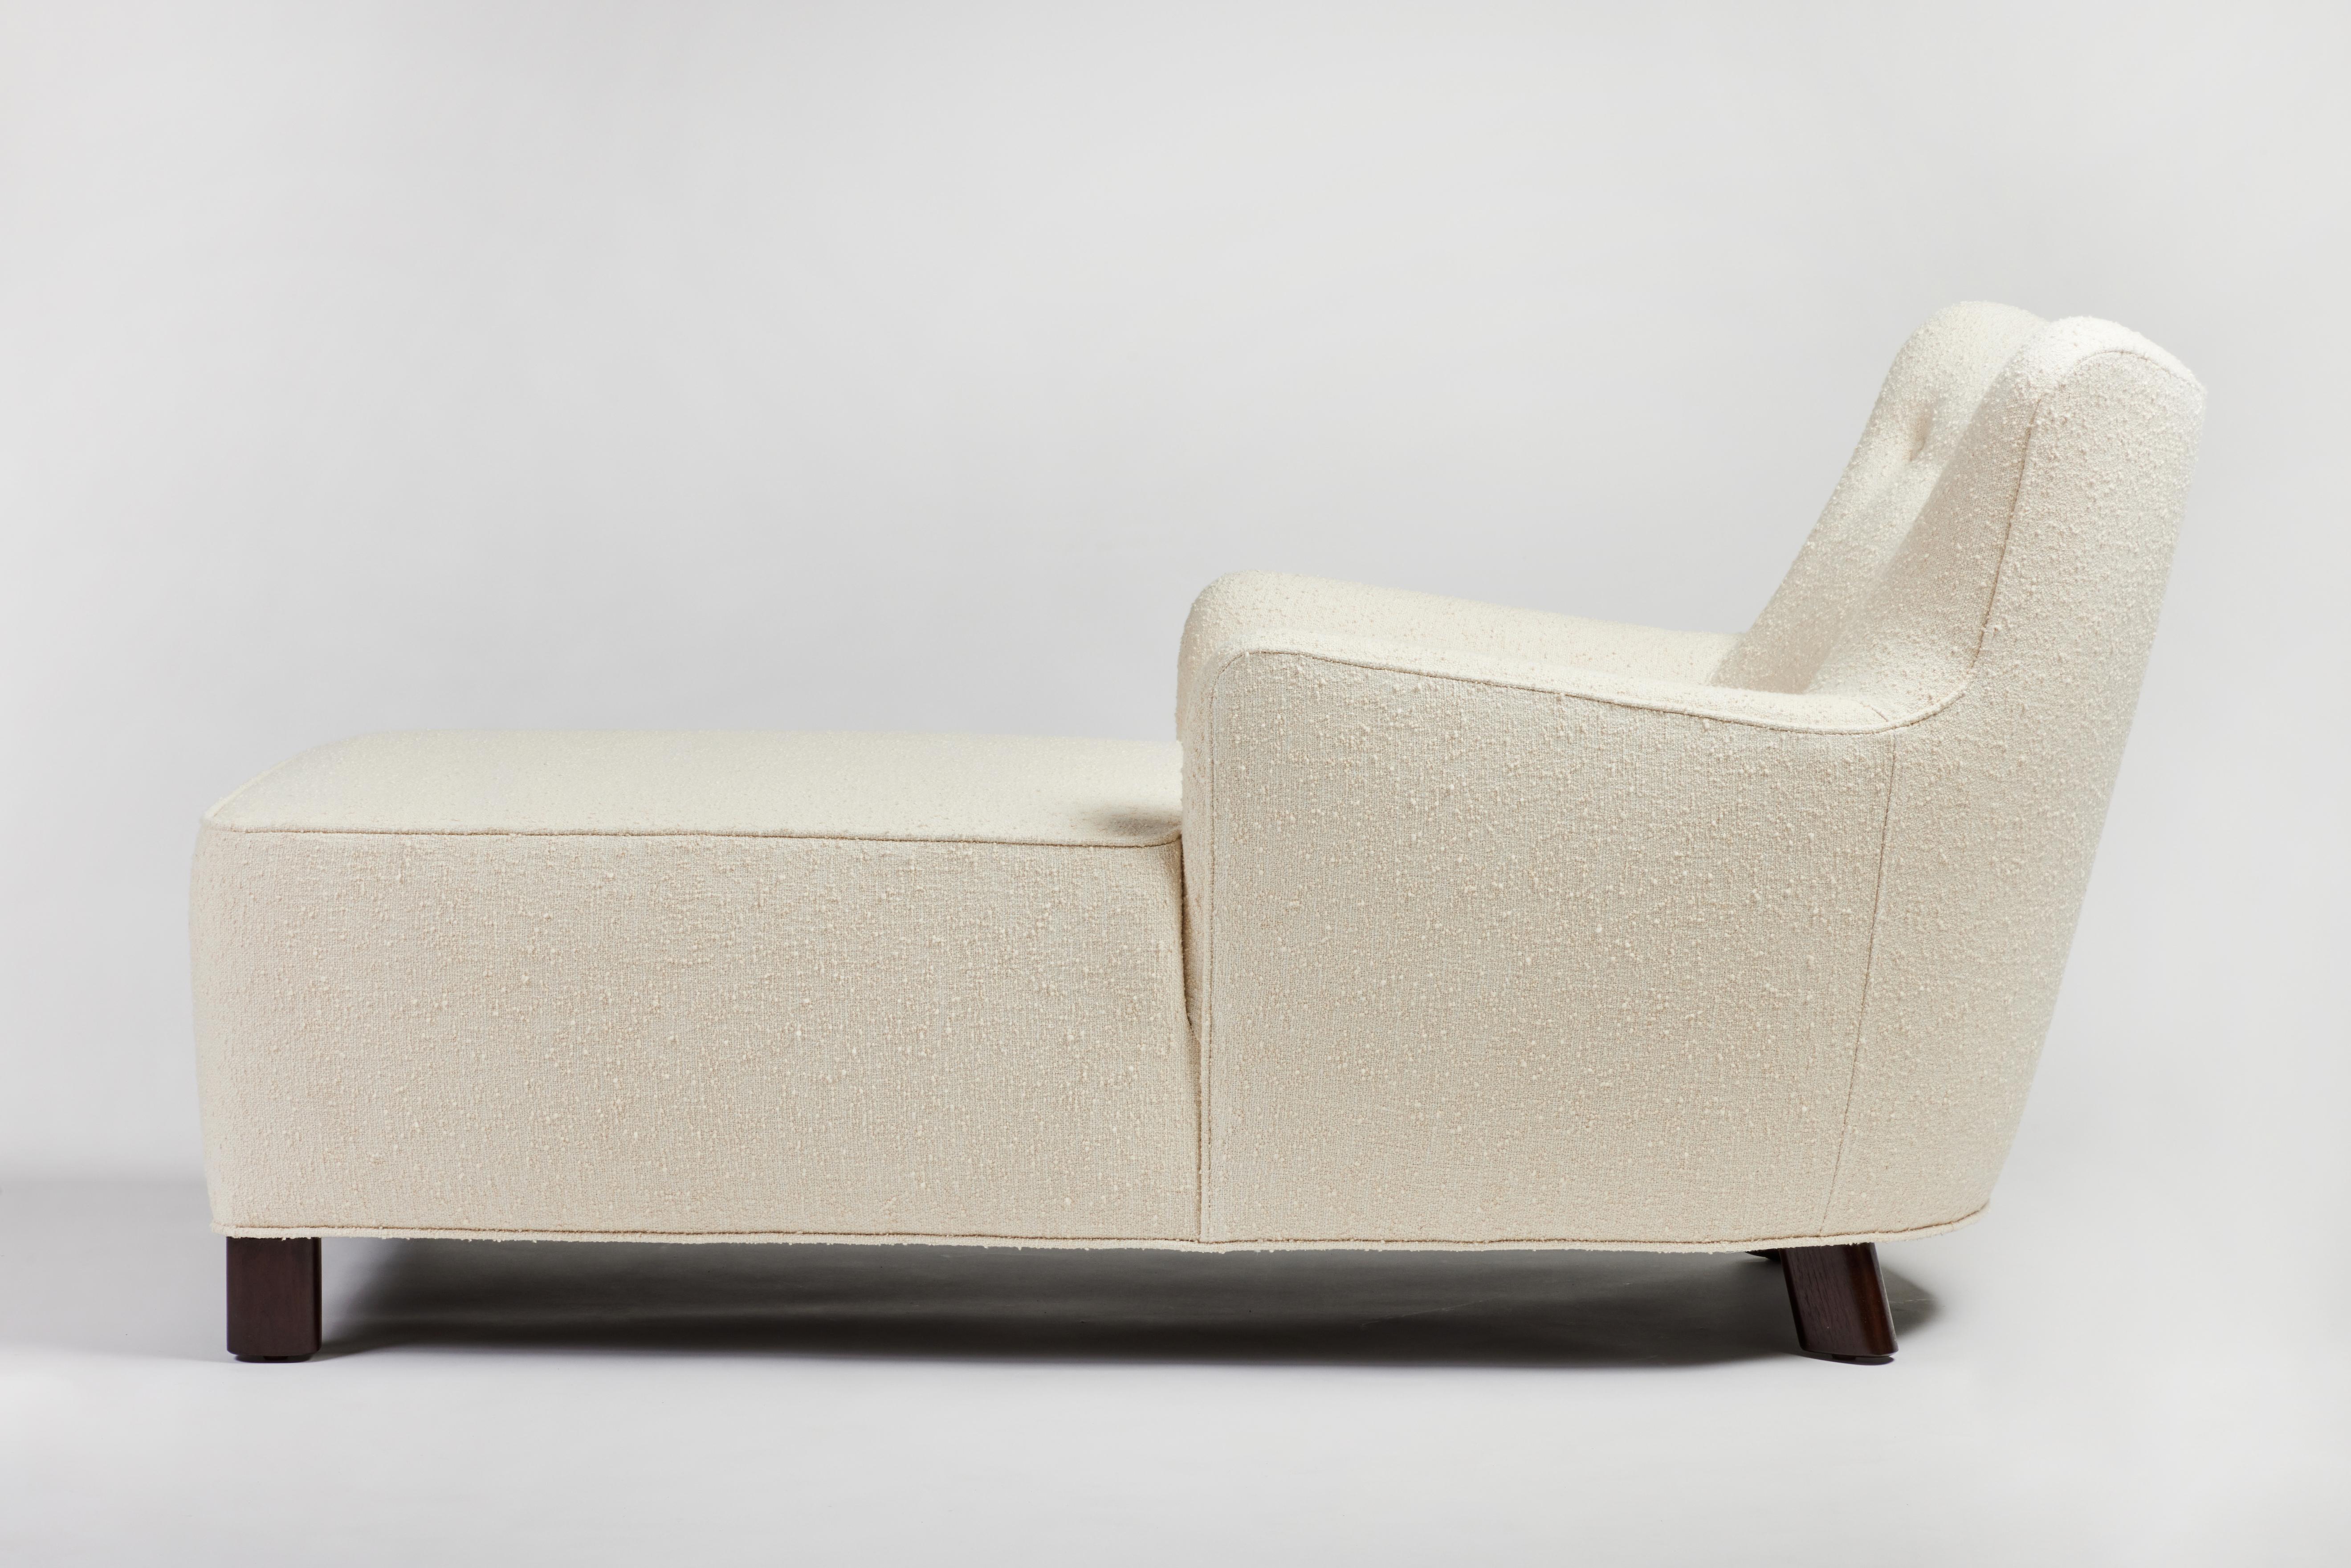 cream chaise lounge